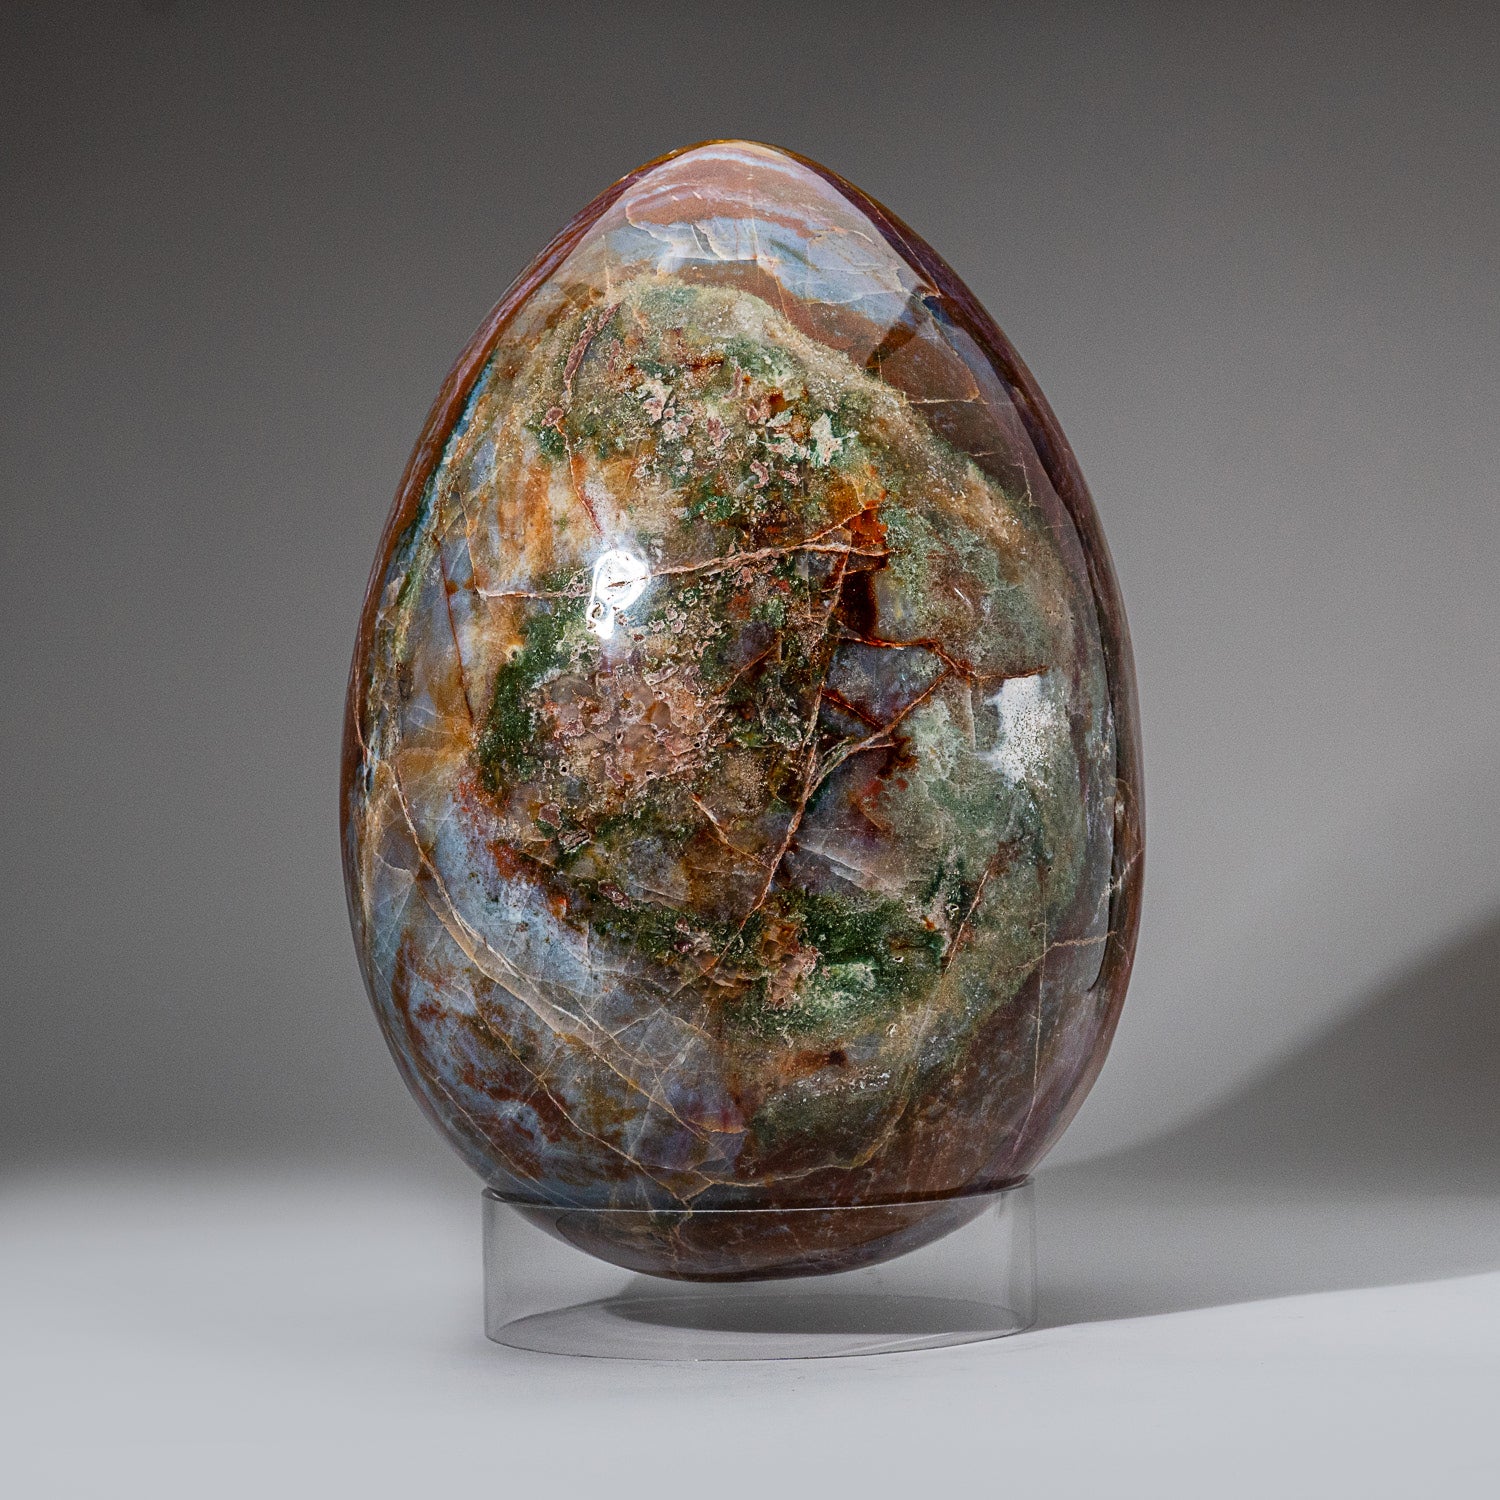 Huge Genuine Polished Ocean Jasper Egg from Madagascar (48 lbs)